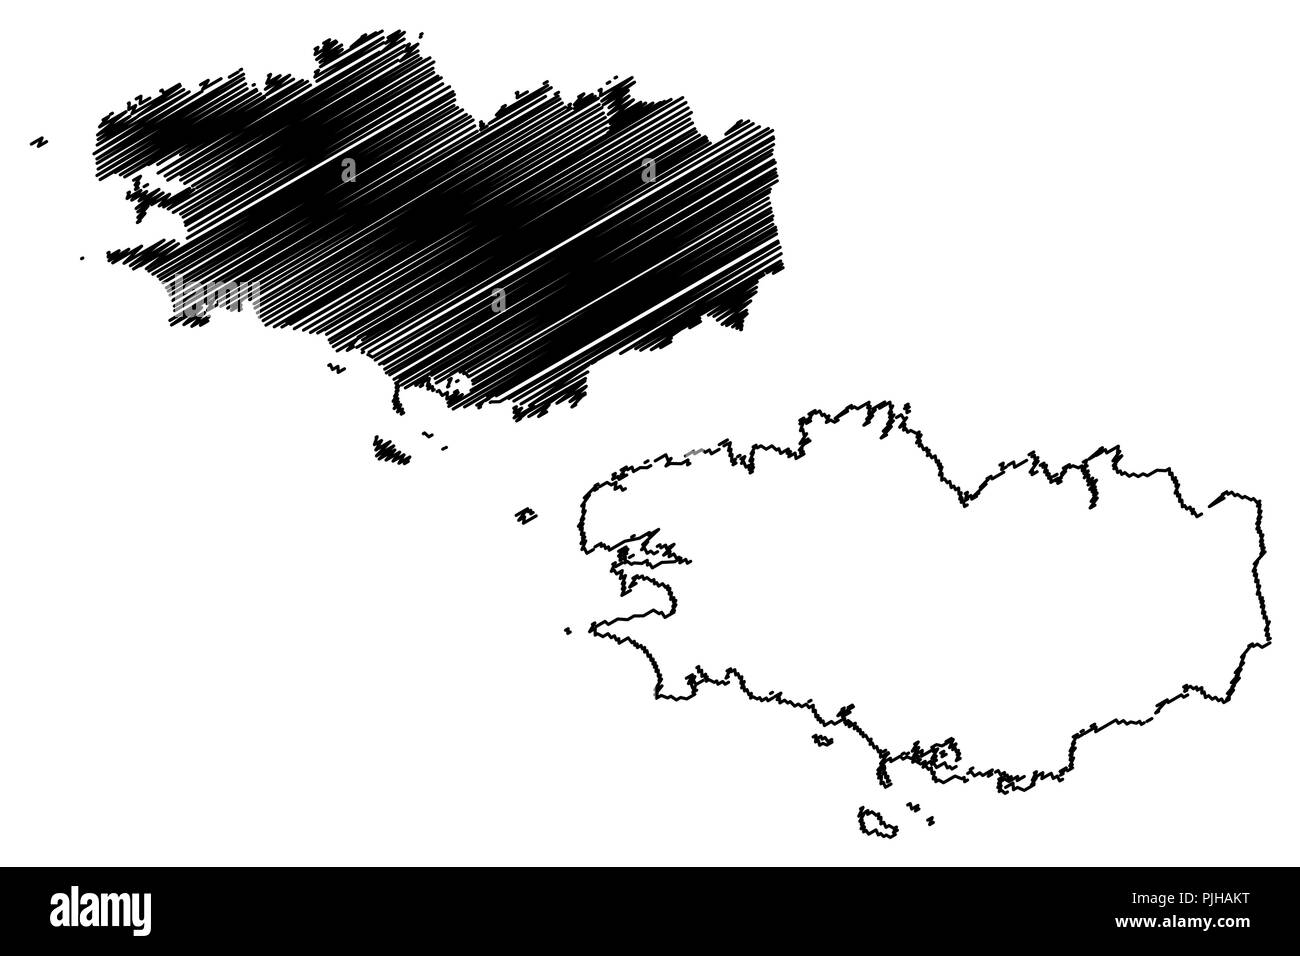 Region of Brittany (France, administrative region) map vector illustration, scribble sketch Brittany (administrative region) map Stock Vector